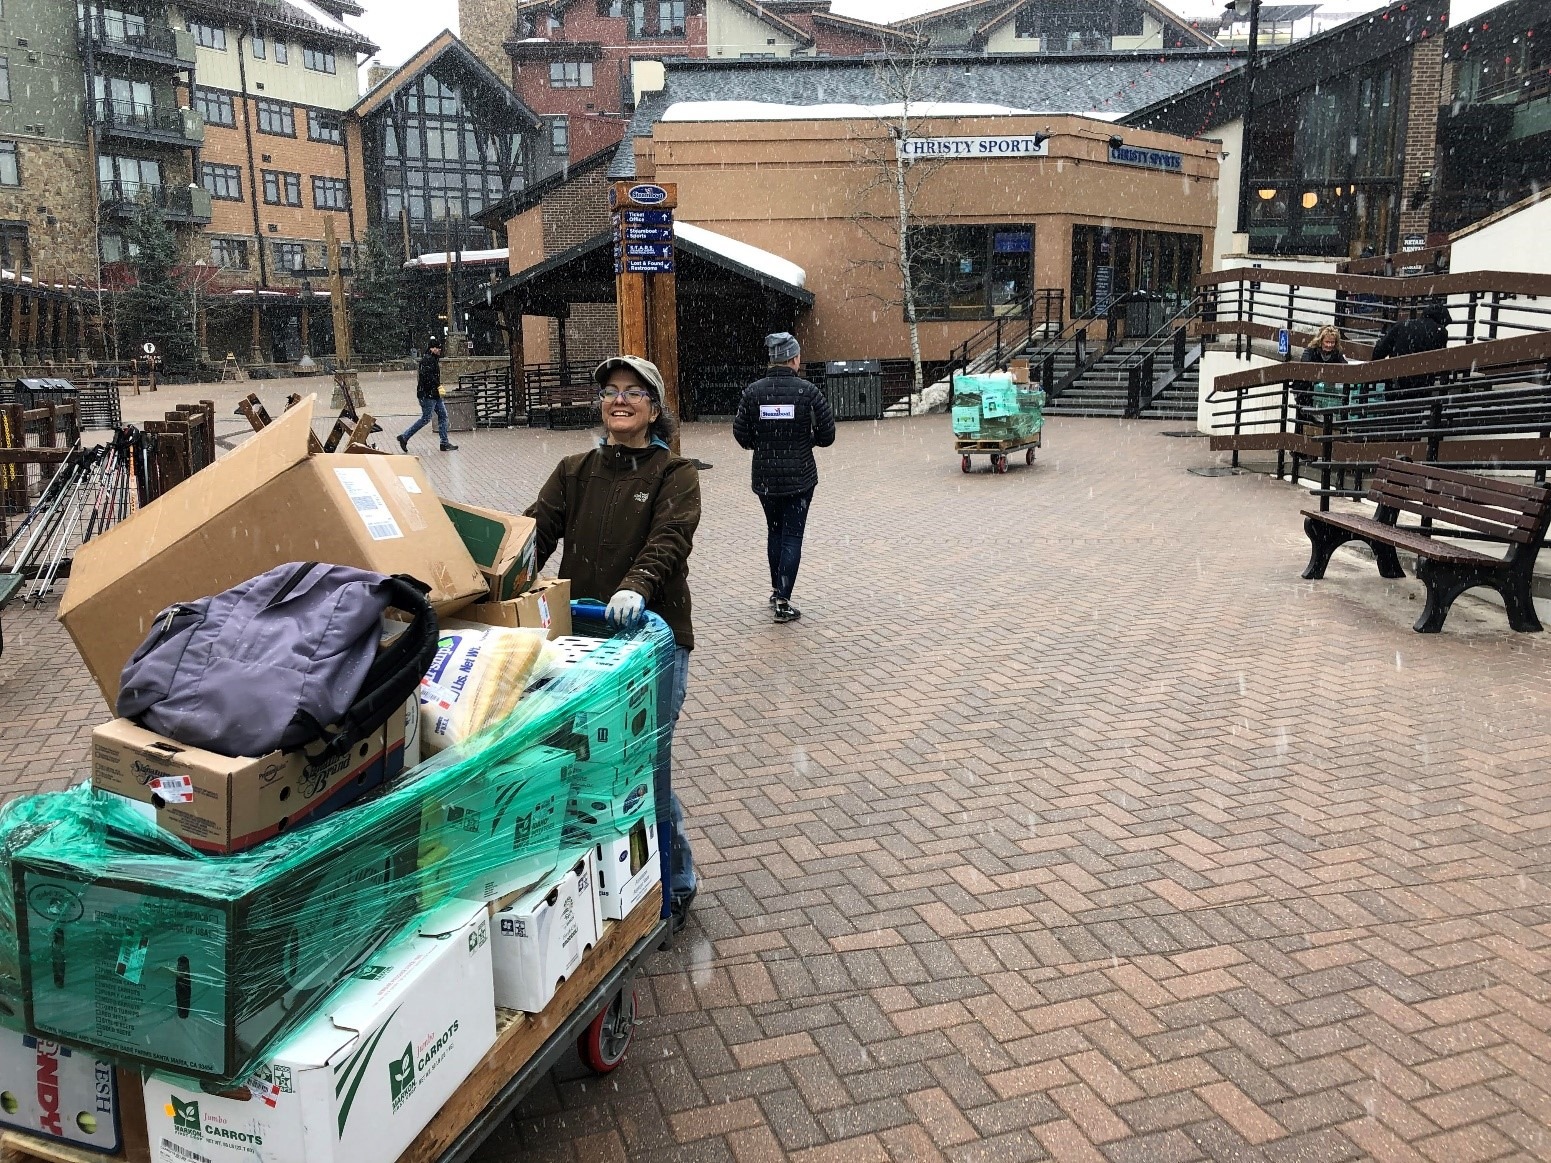 Woman in brown jacket and tan baseball cap pushes large flat cart full of food boxes